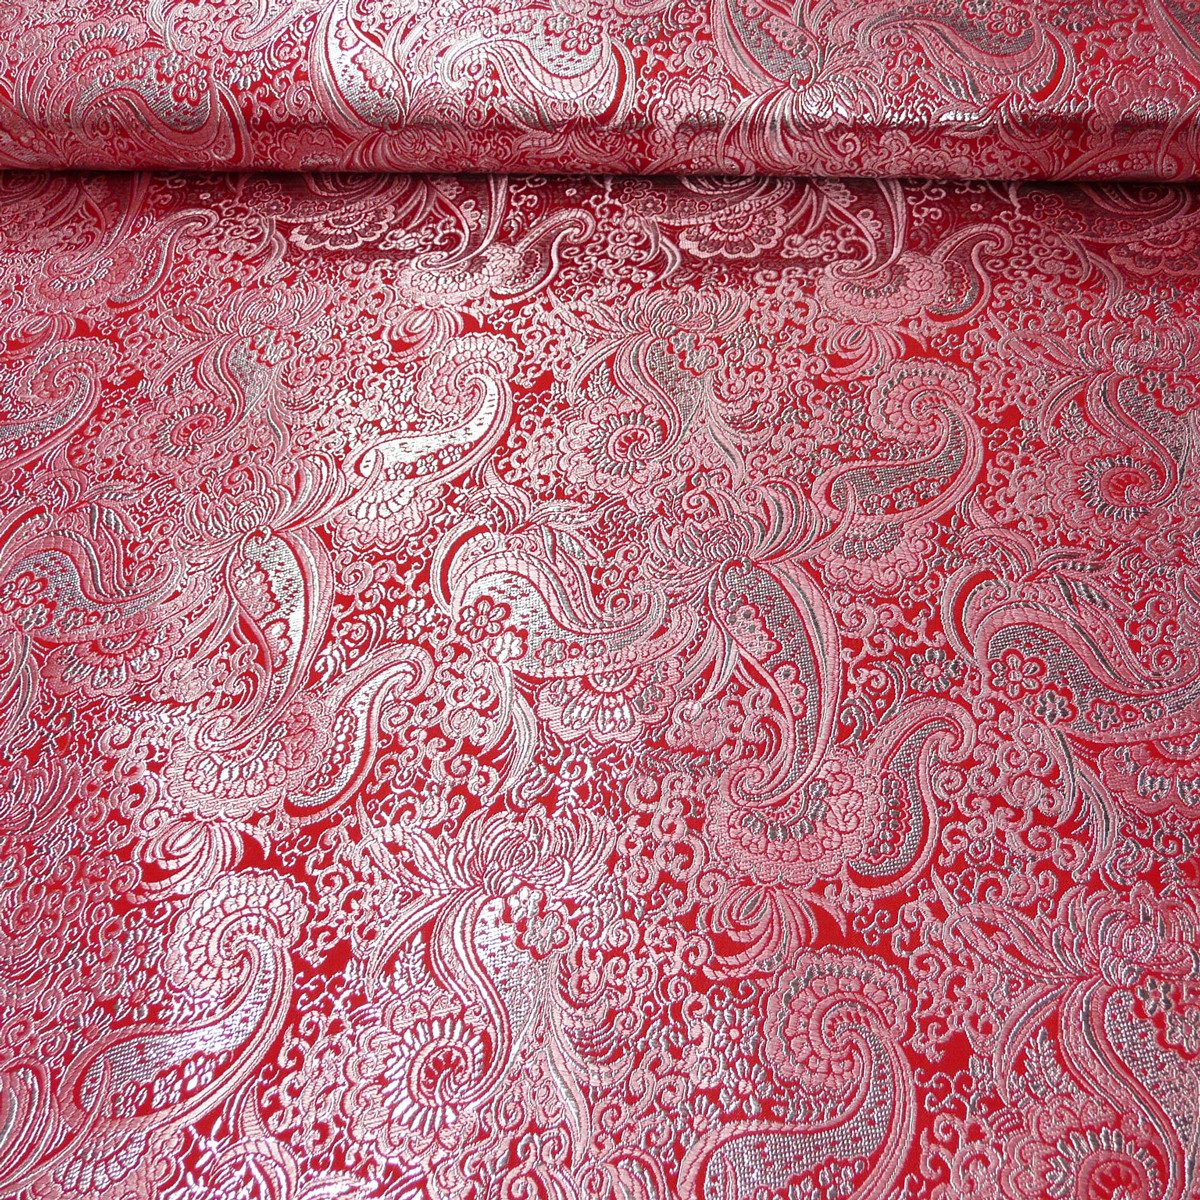 SCHÖNER LEBEN. Stoff Lurex Jaquard Stoff Paisley Ornament rot silberfarbig, mit Metallic-Effekt